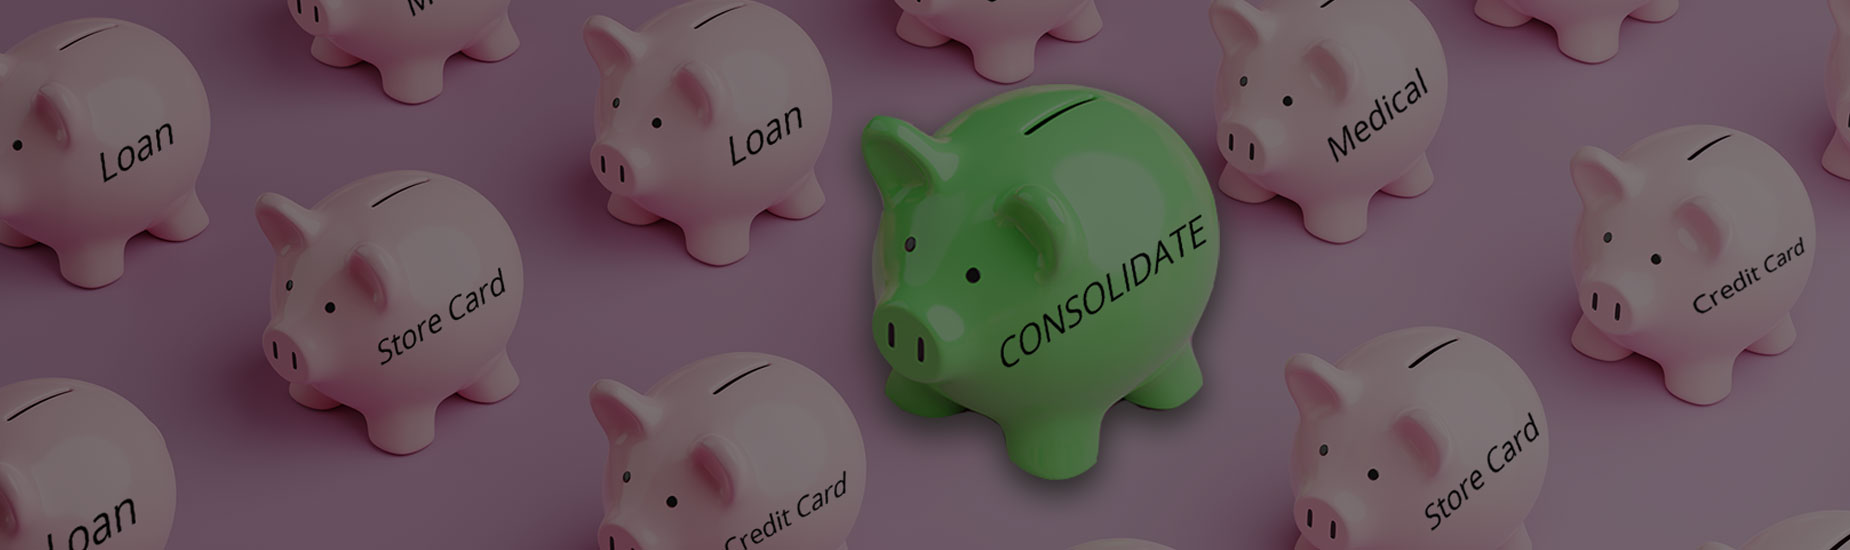 Debt Consolidation SlideShow